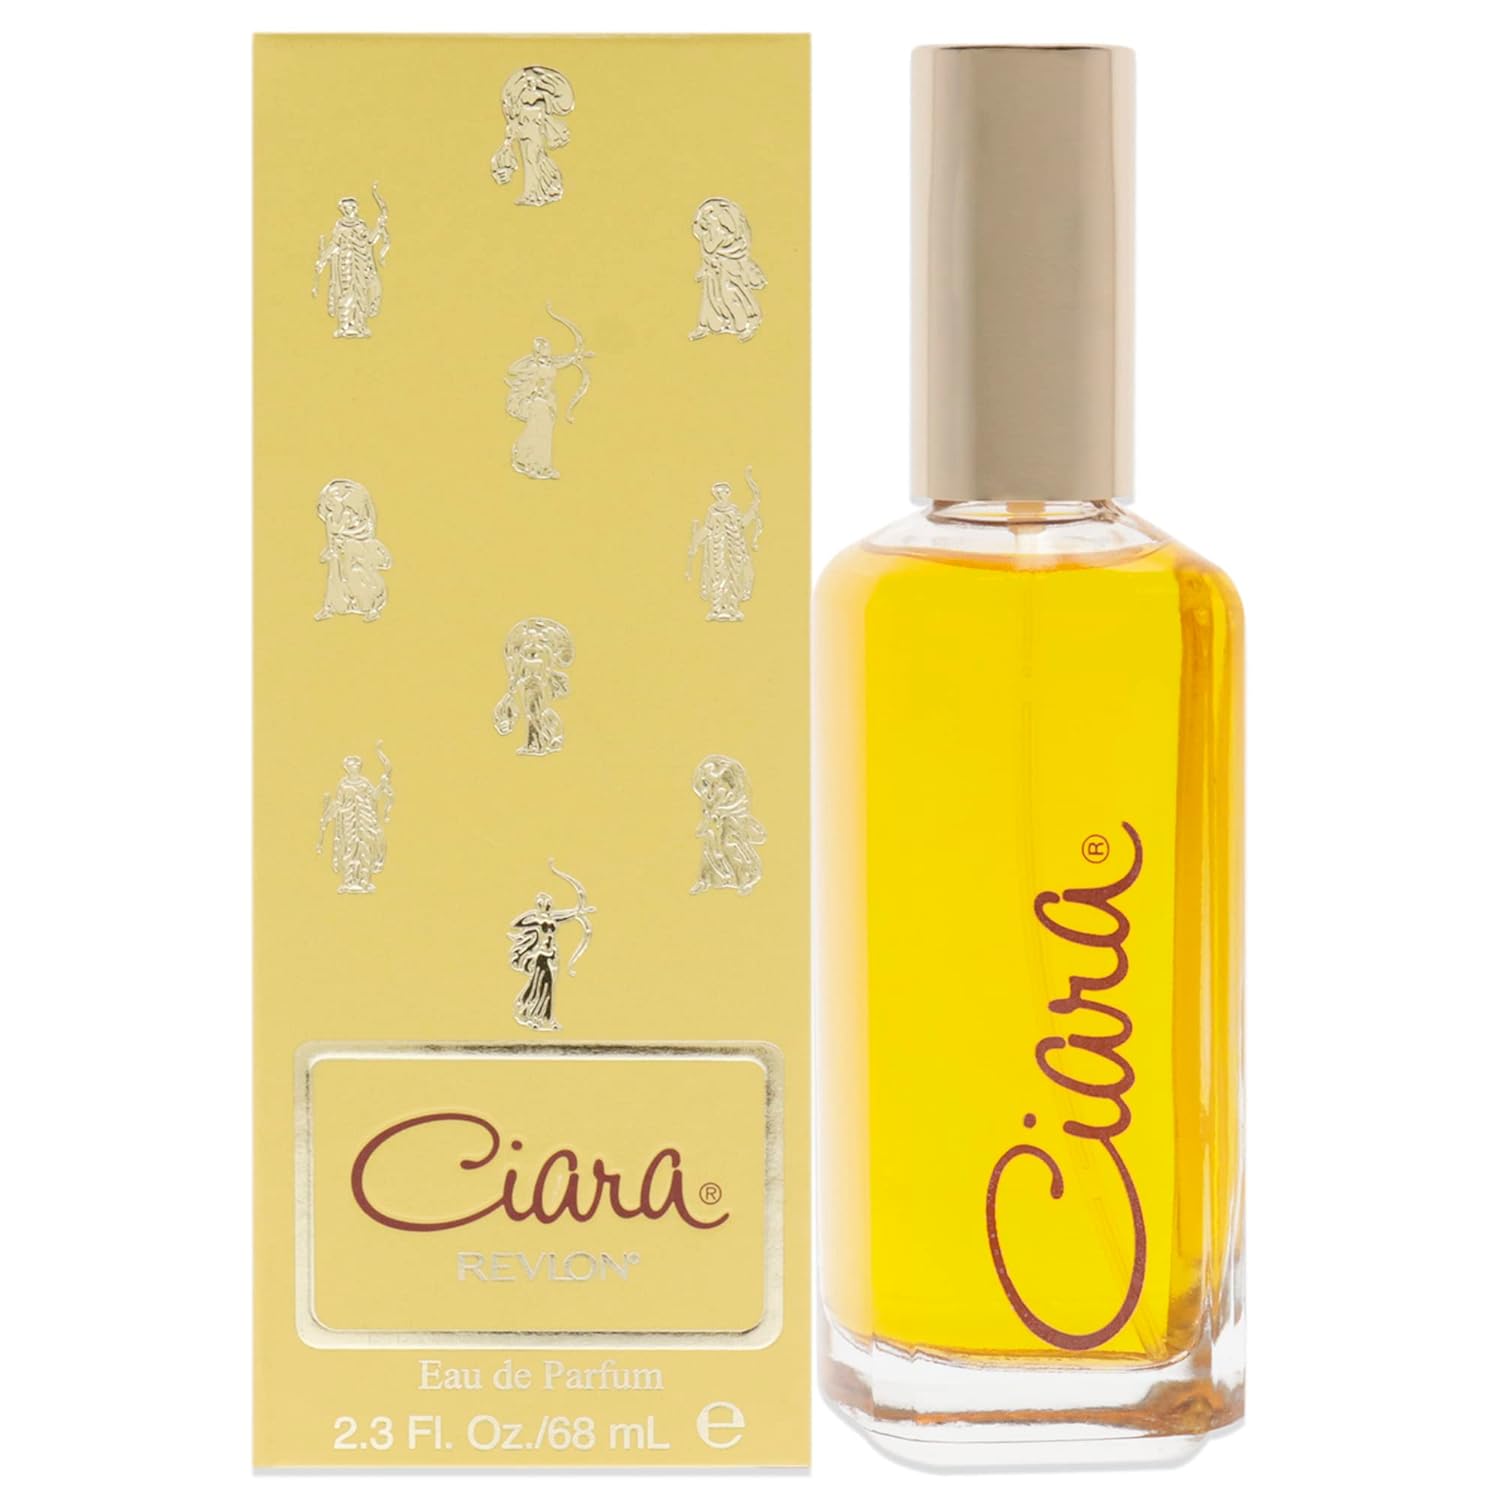 Ciara by Revlon 2.3 oz EDP Spray for Women